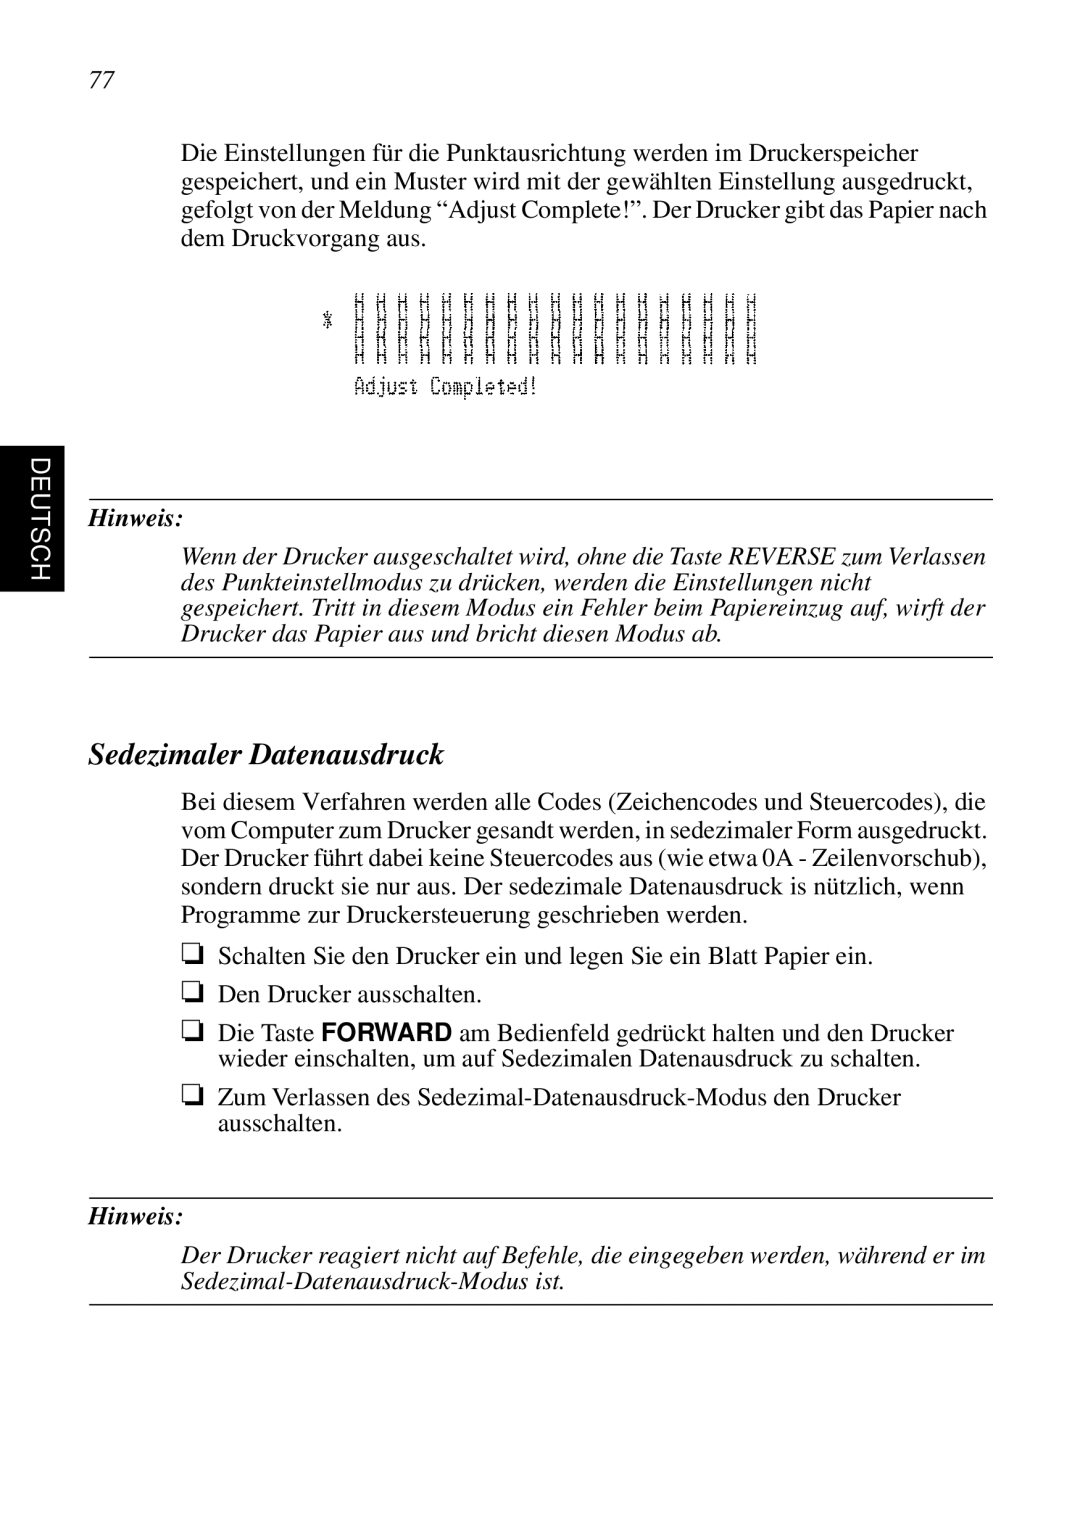 Star Micronics SP298 user manual Sedezimaler Datenausdruck, Deutsch, Hinweis 